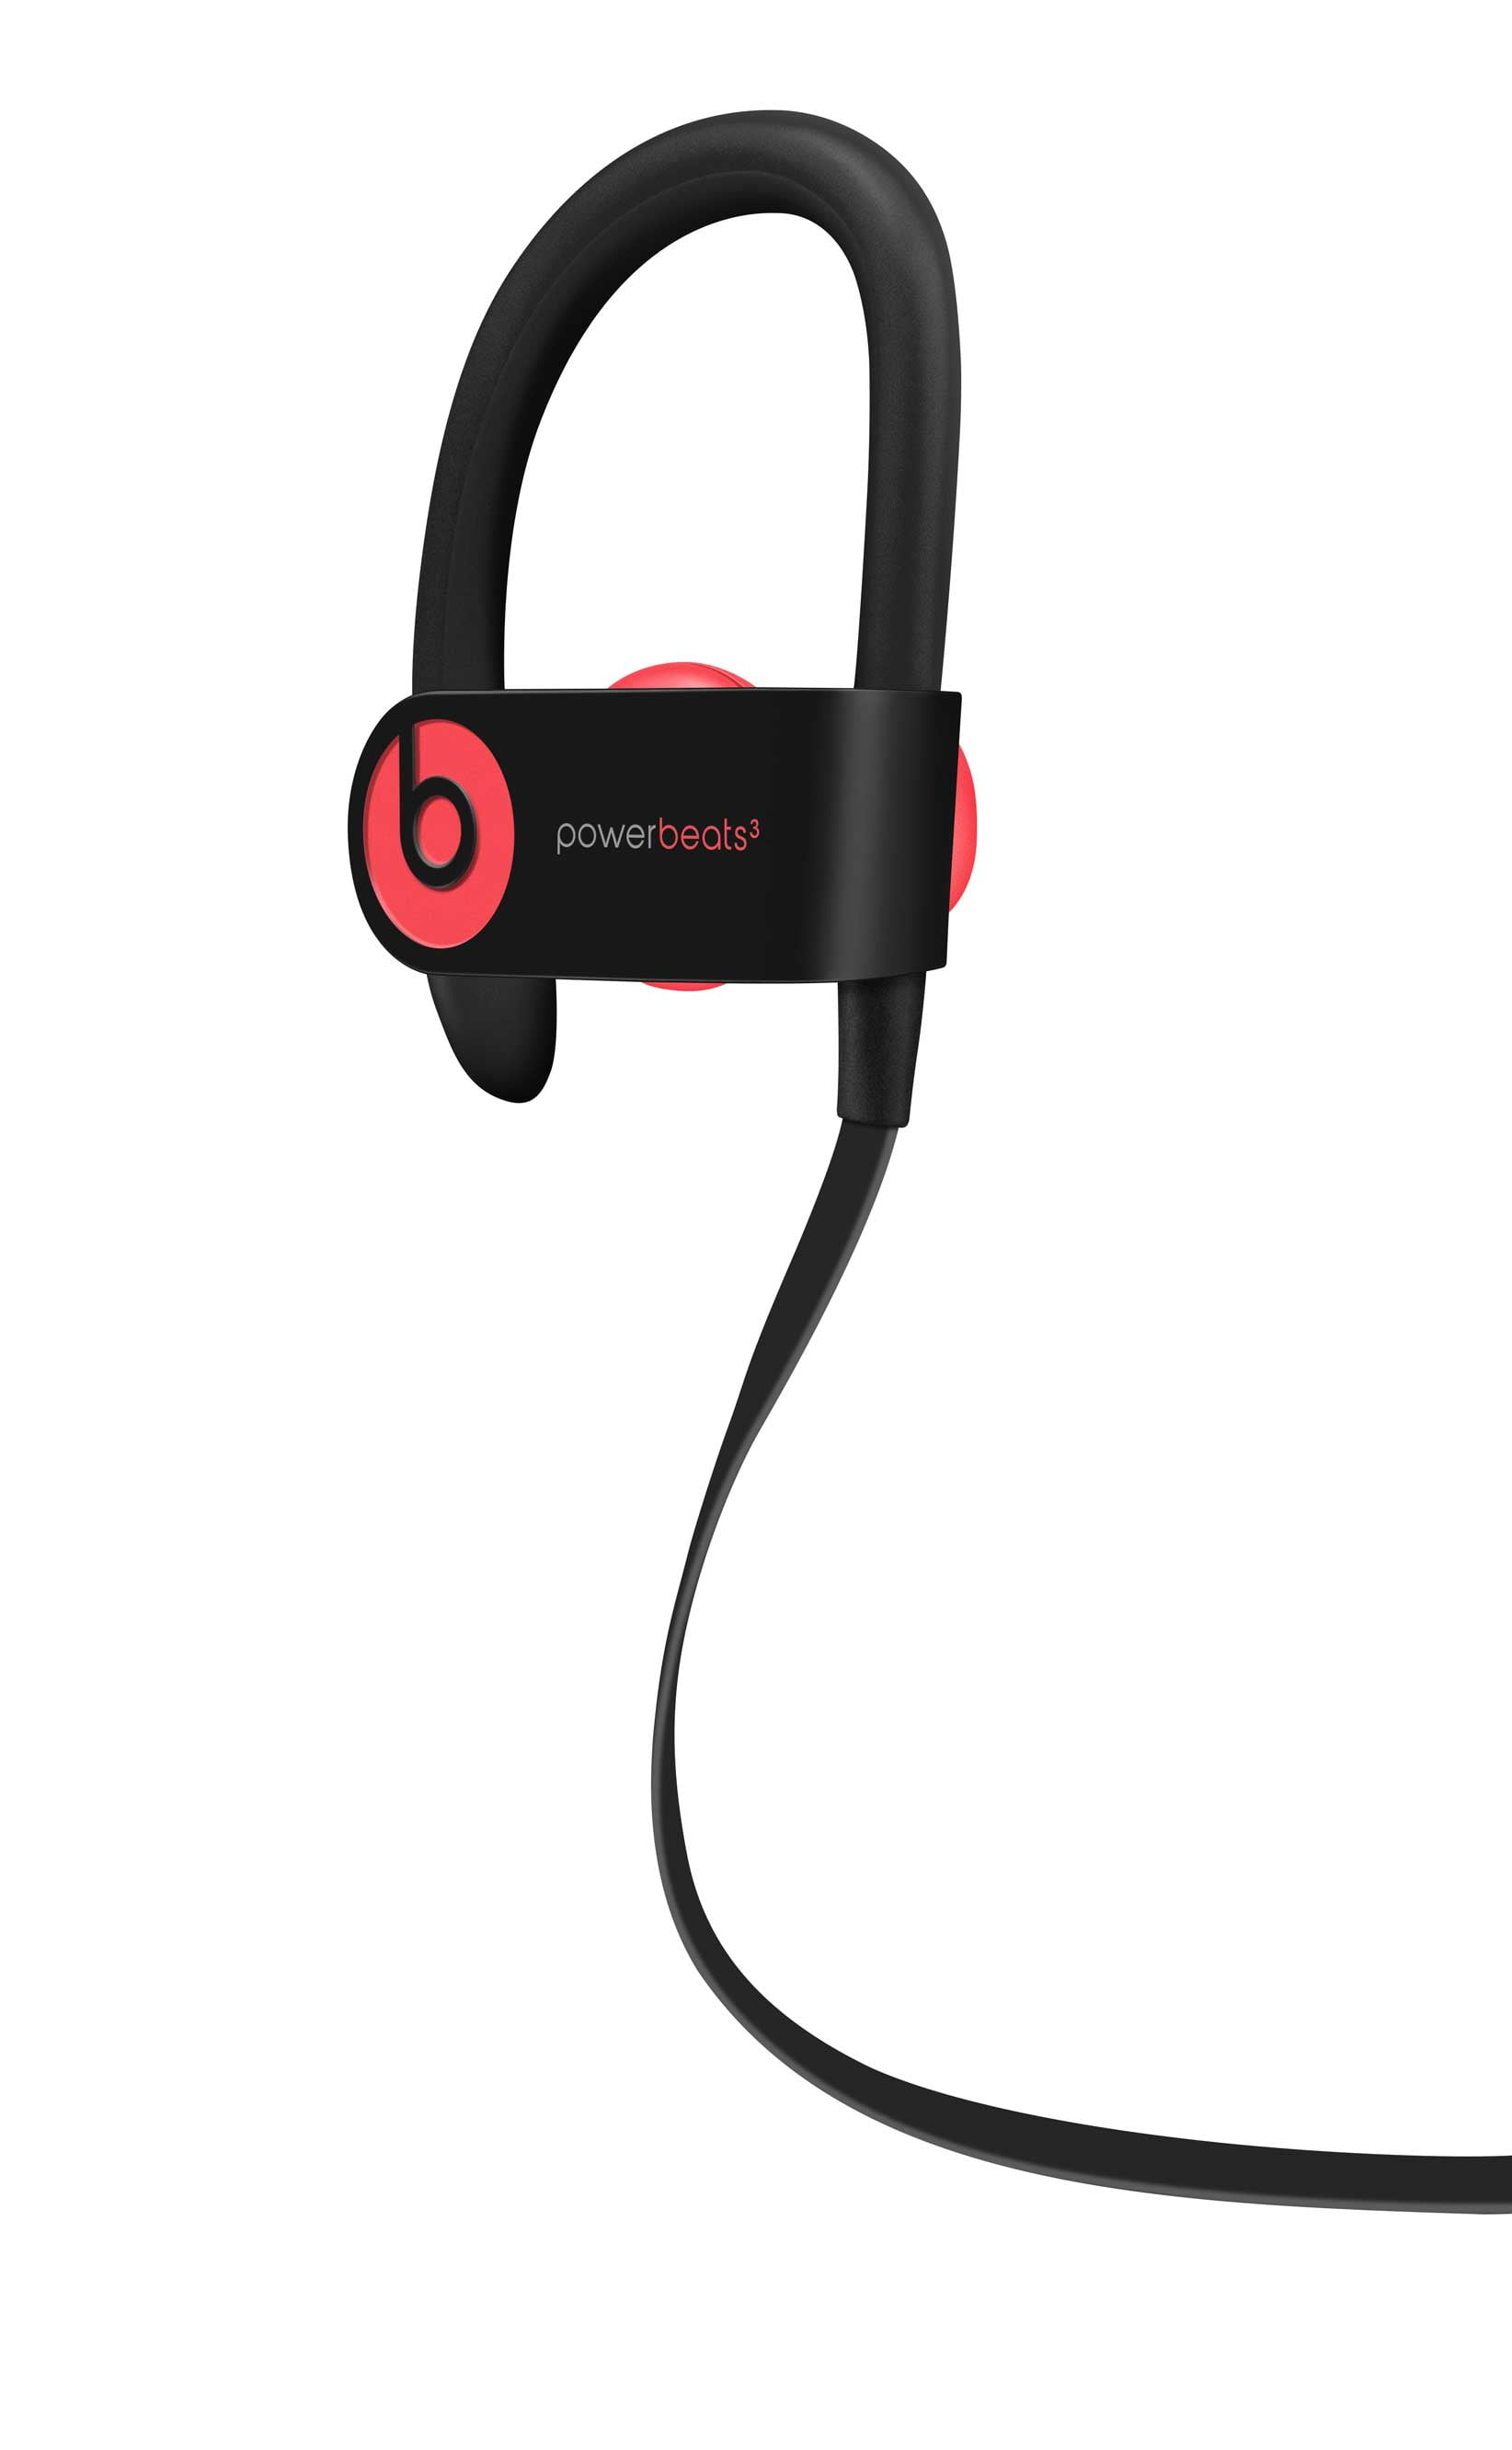 powerbeats3 wireless headphones